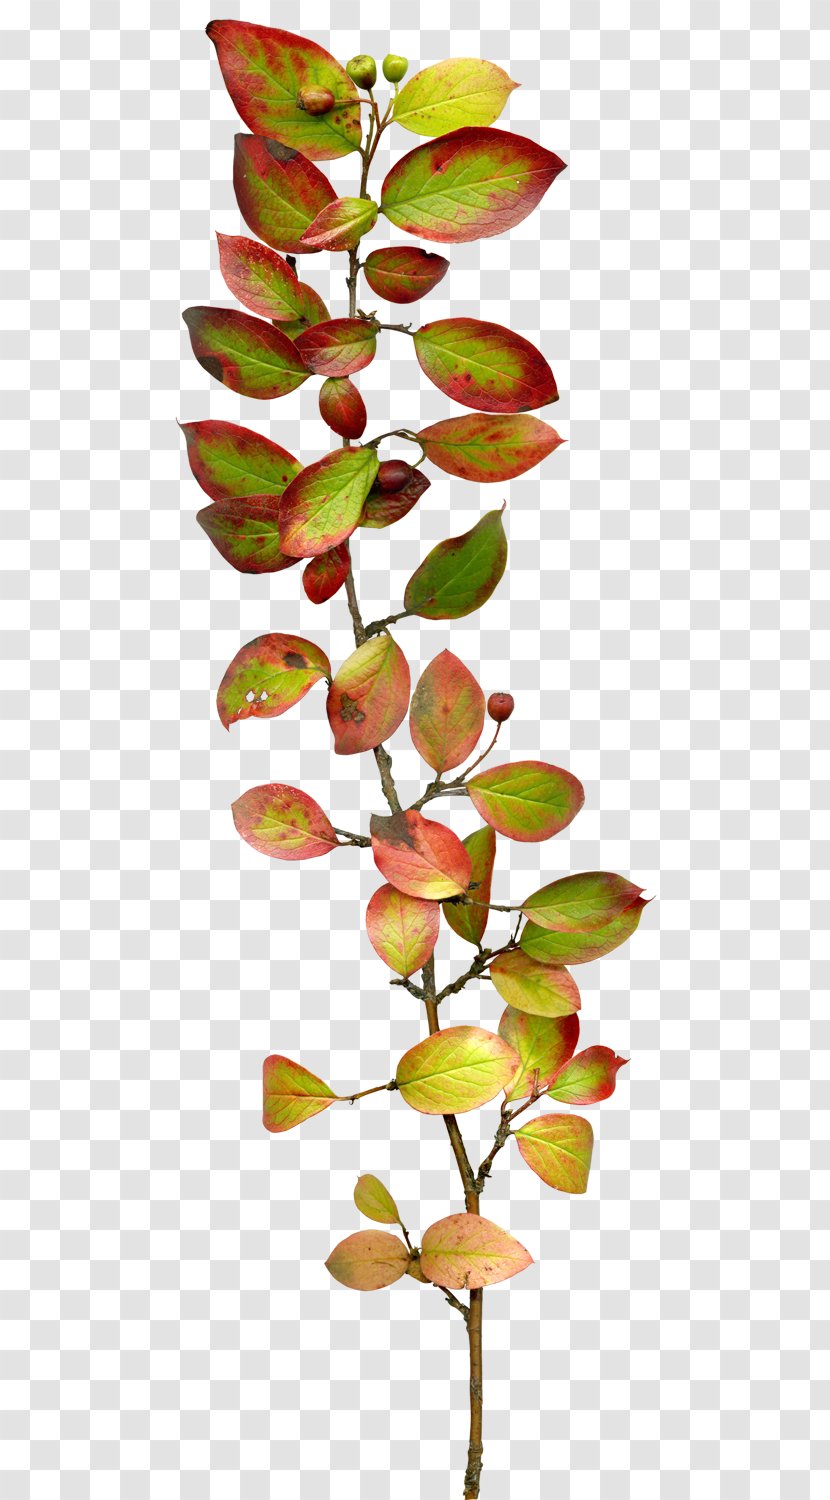 Leaf Twig Branch Pixel - Transparency And Translucency - Leaves Transparent PNG